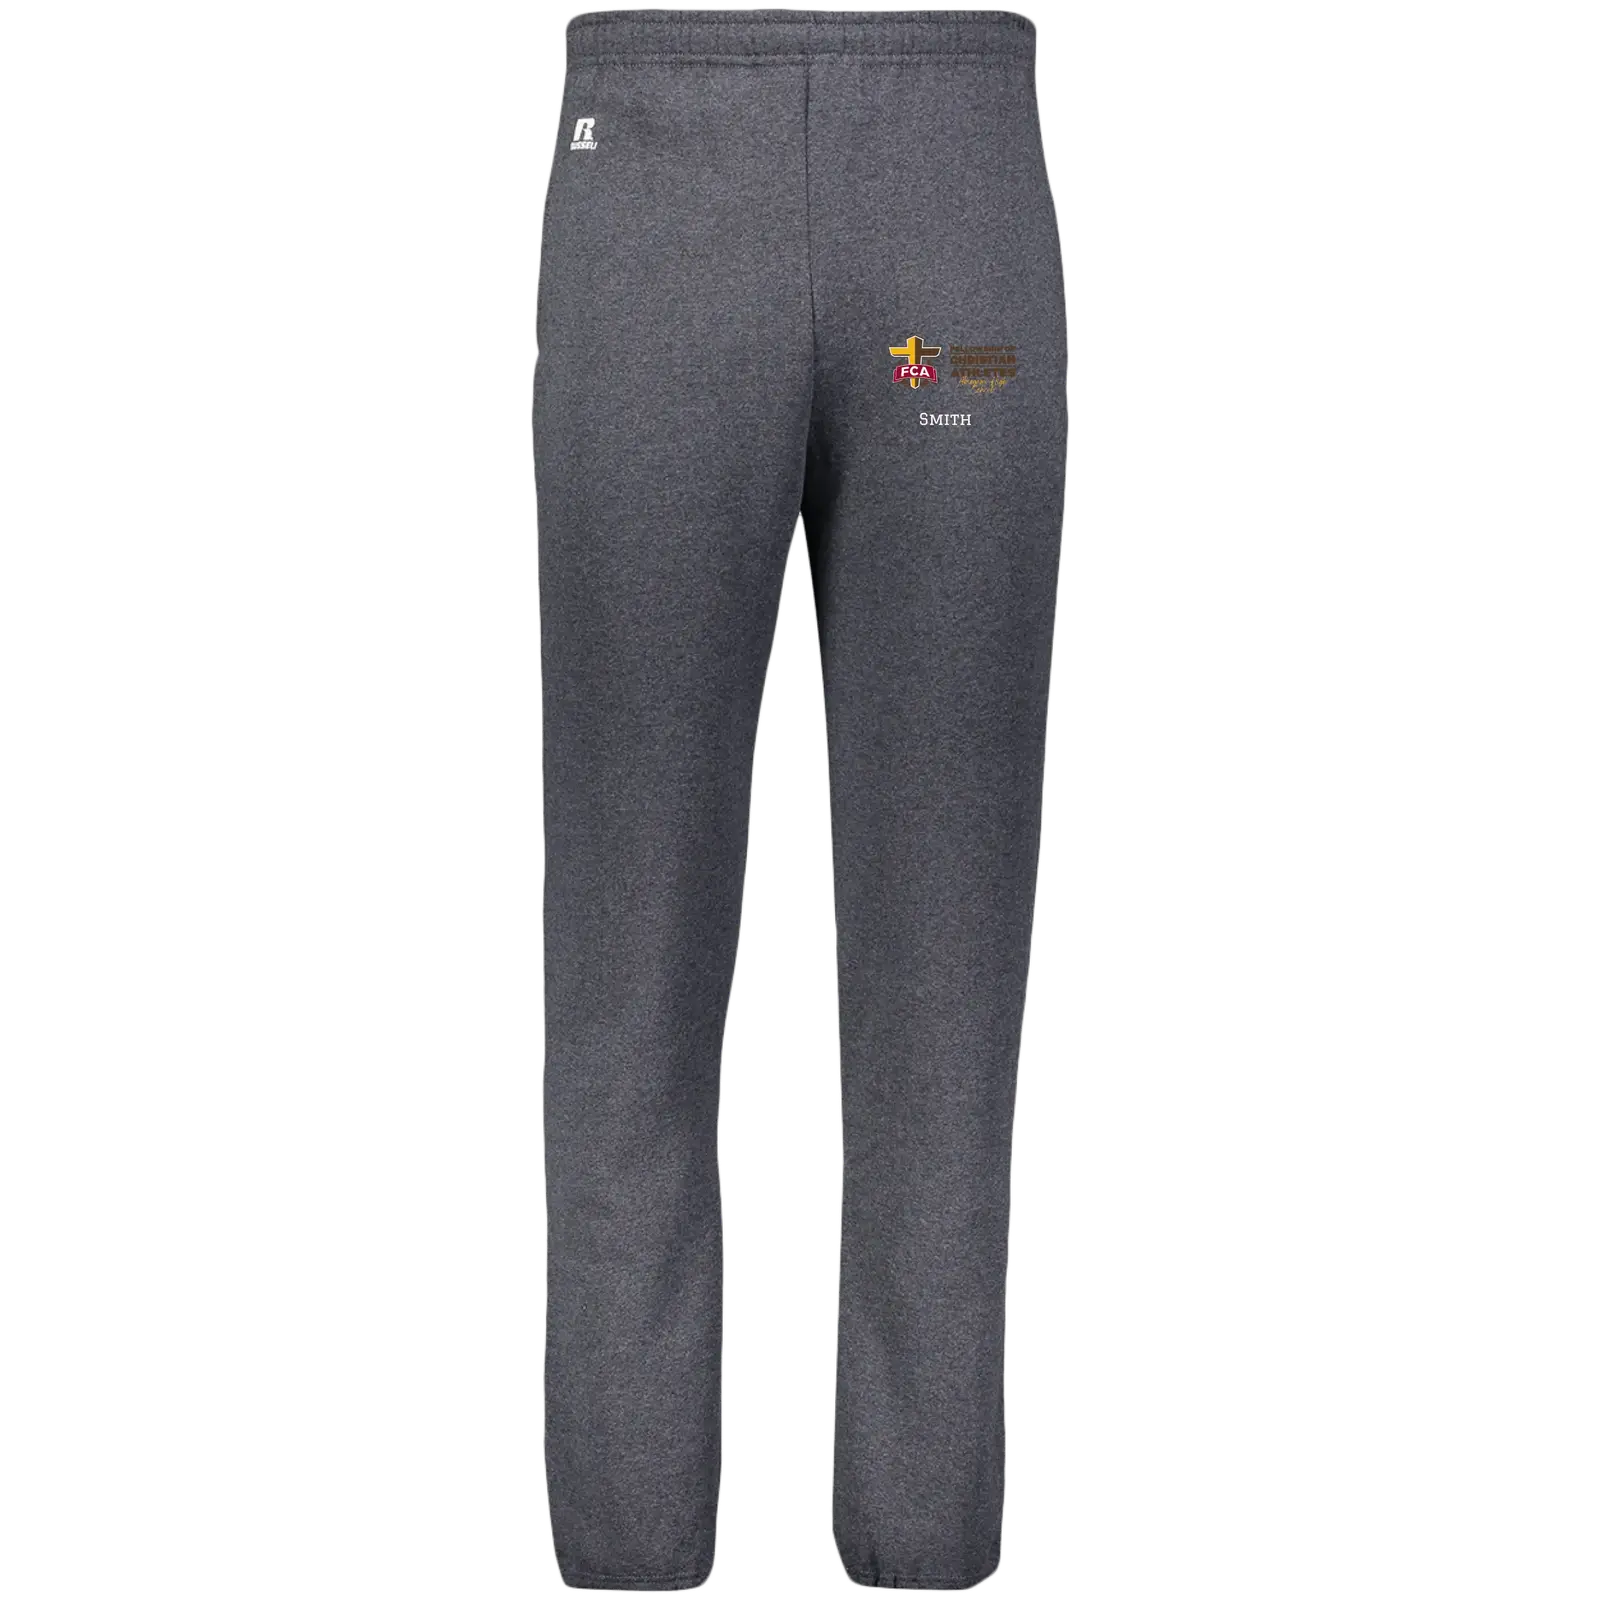 Absegami FCA Pants - Shore Break Designs - Customizer